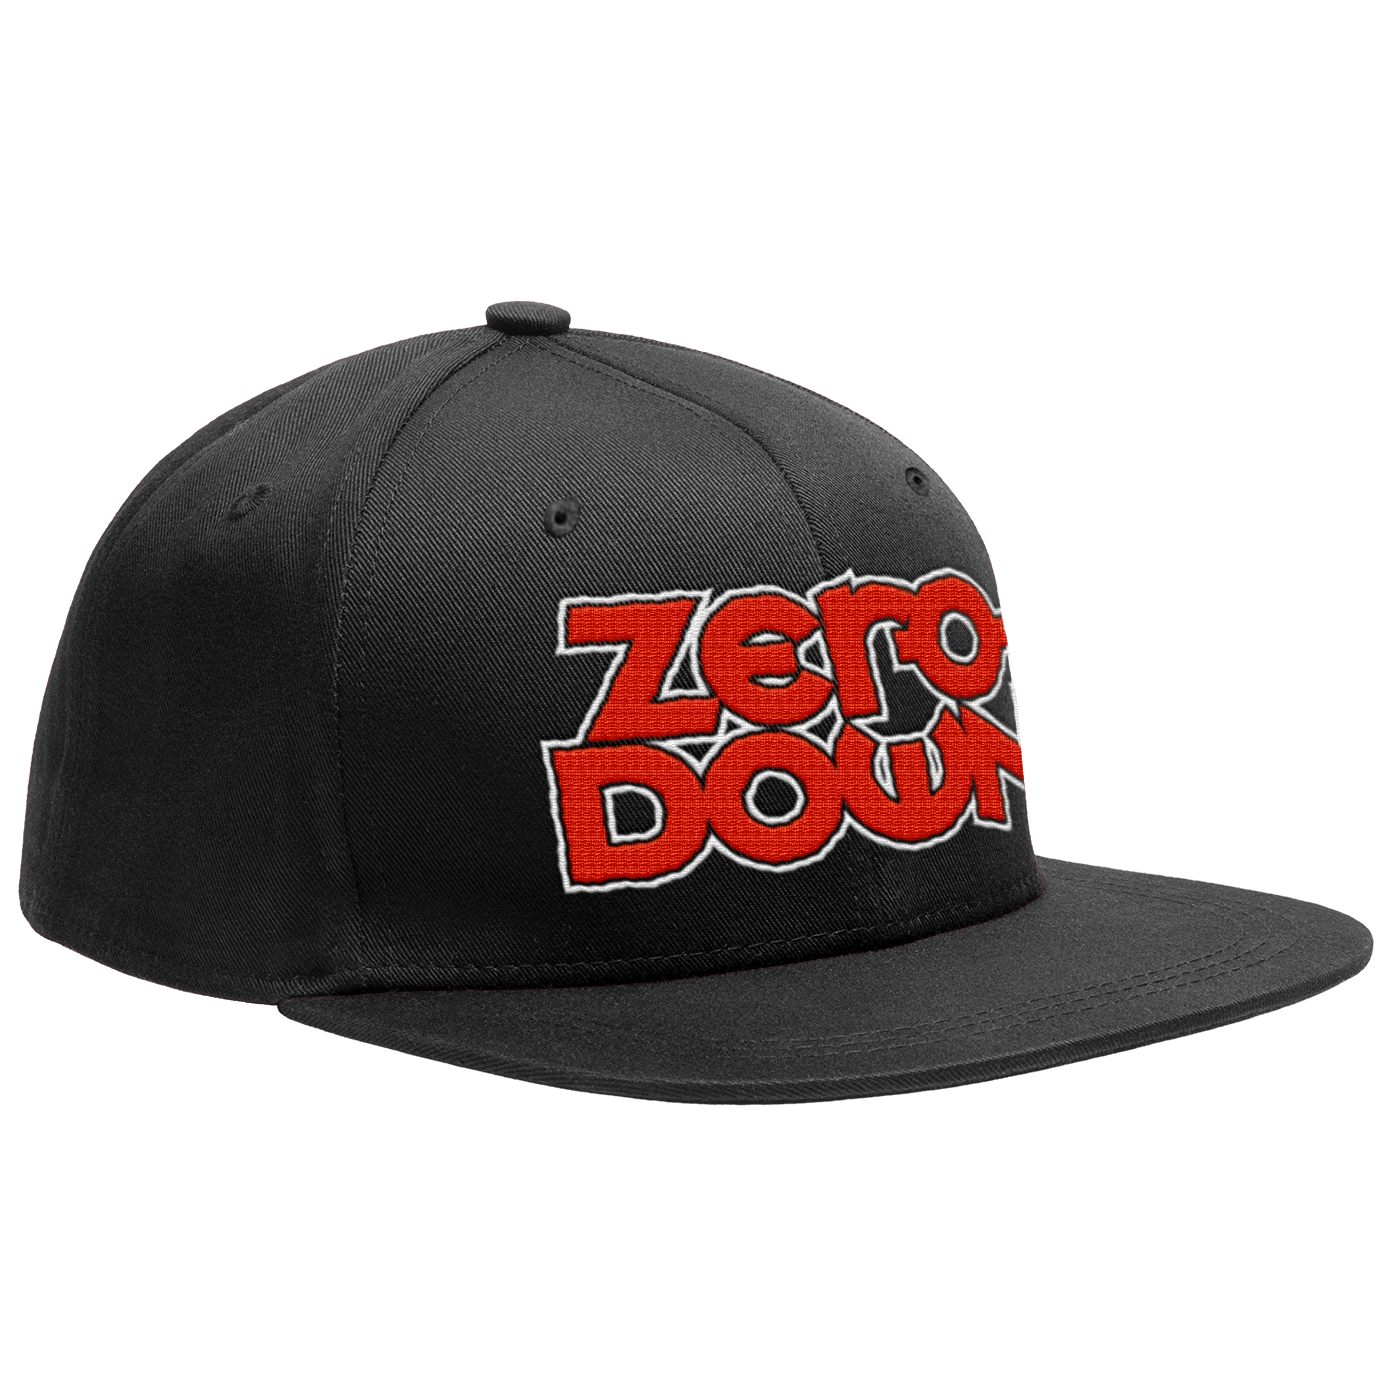 ZERO DOWN - "Logo" (Black) (Snapback Cap)